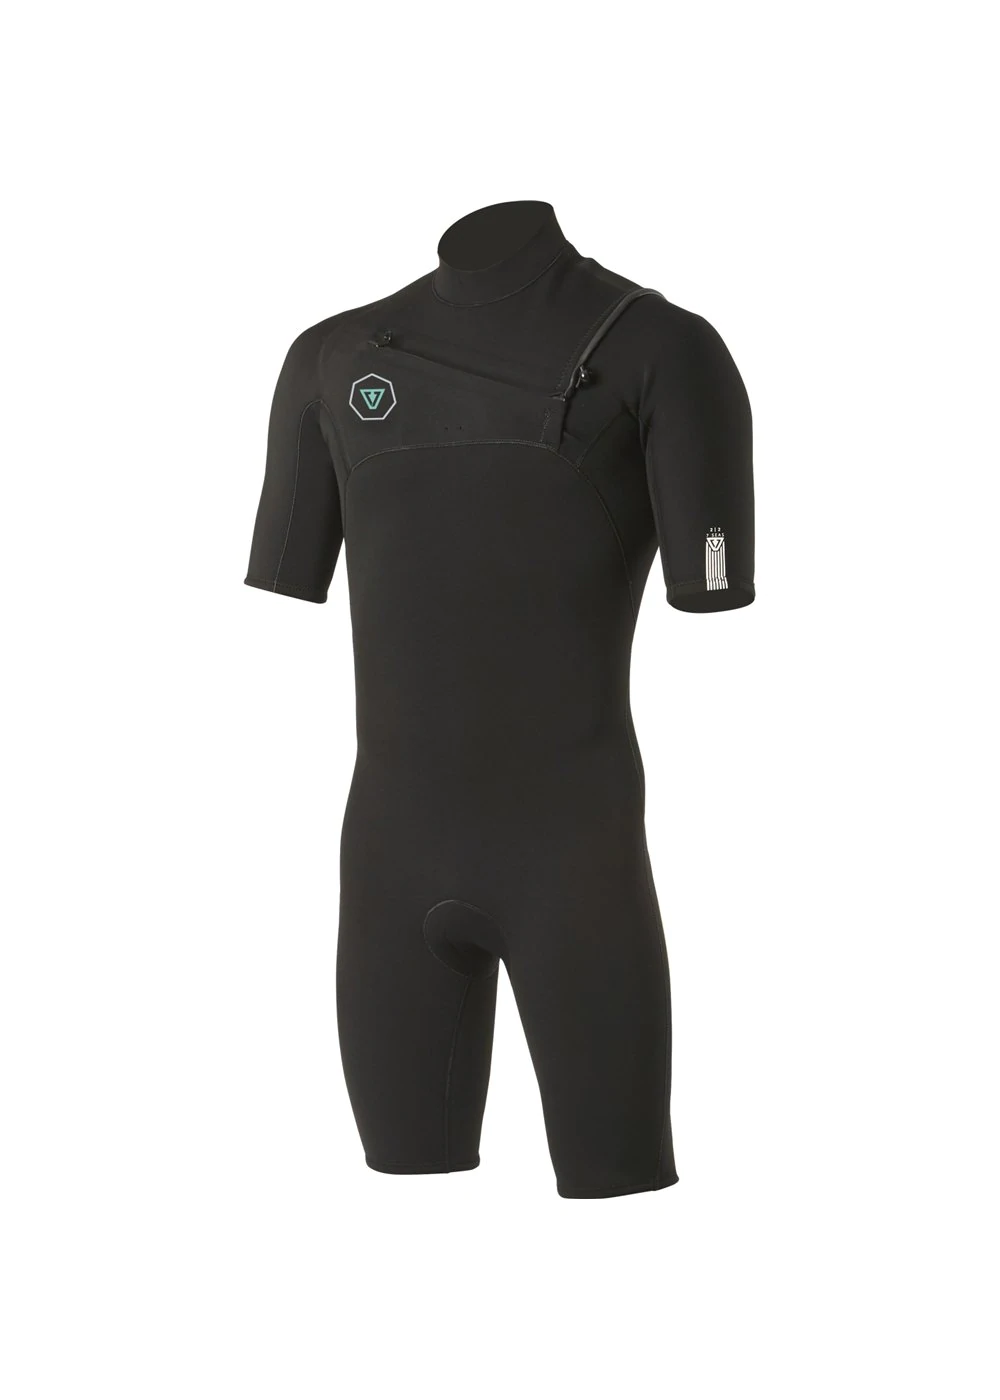 Vissla 7 Seas 2/2 front zip shorty wetsuit black